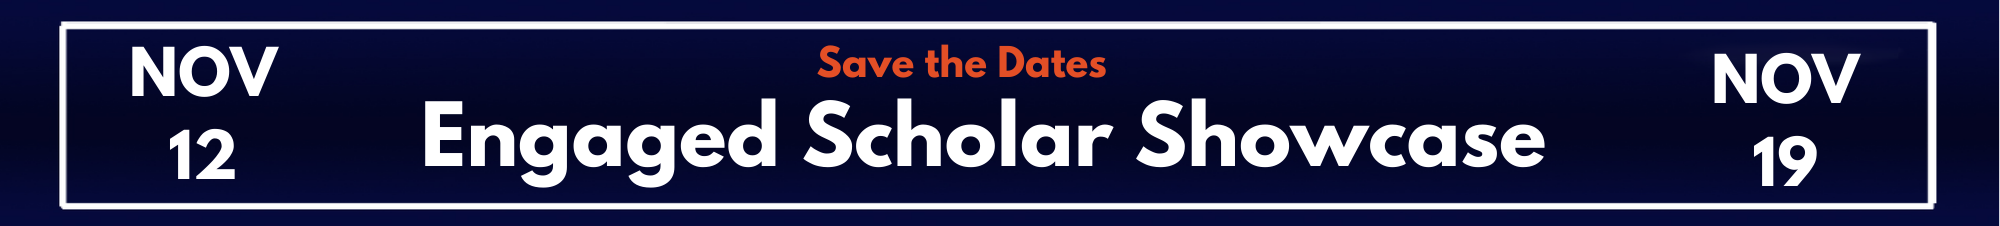 Engaged Scholar Showcase Save the Dates